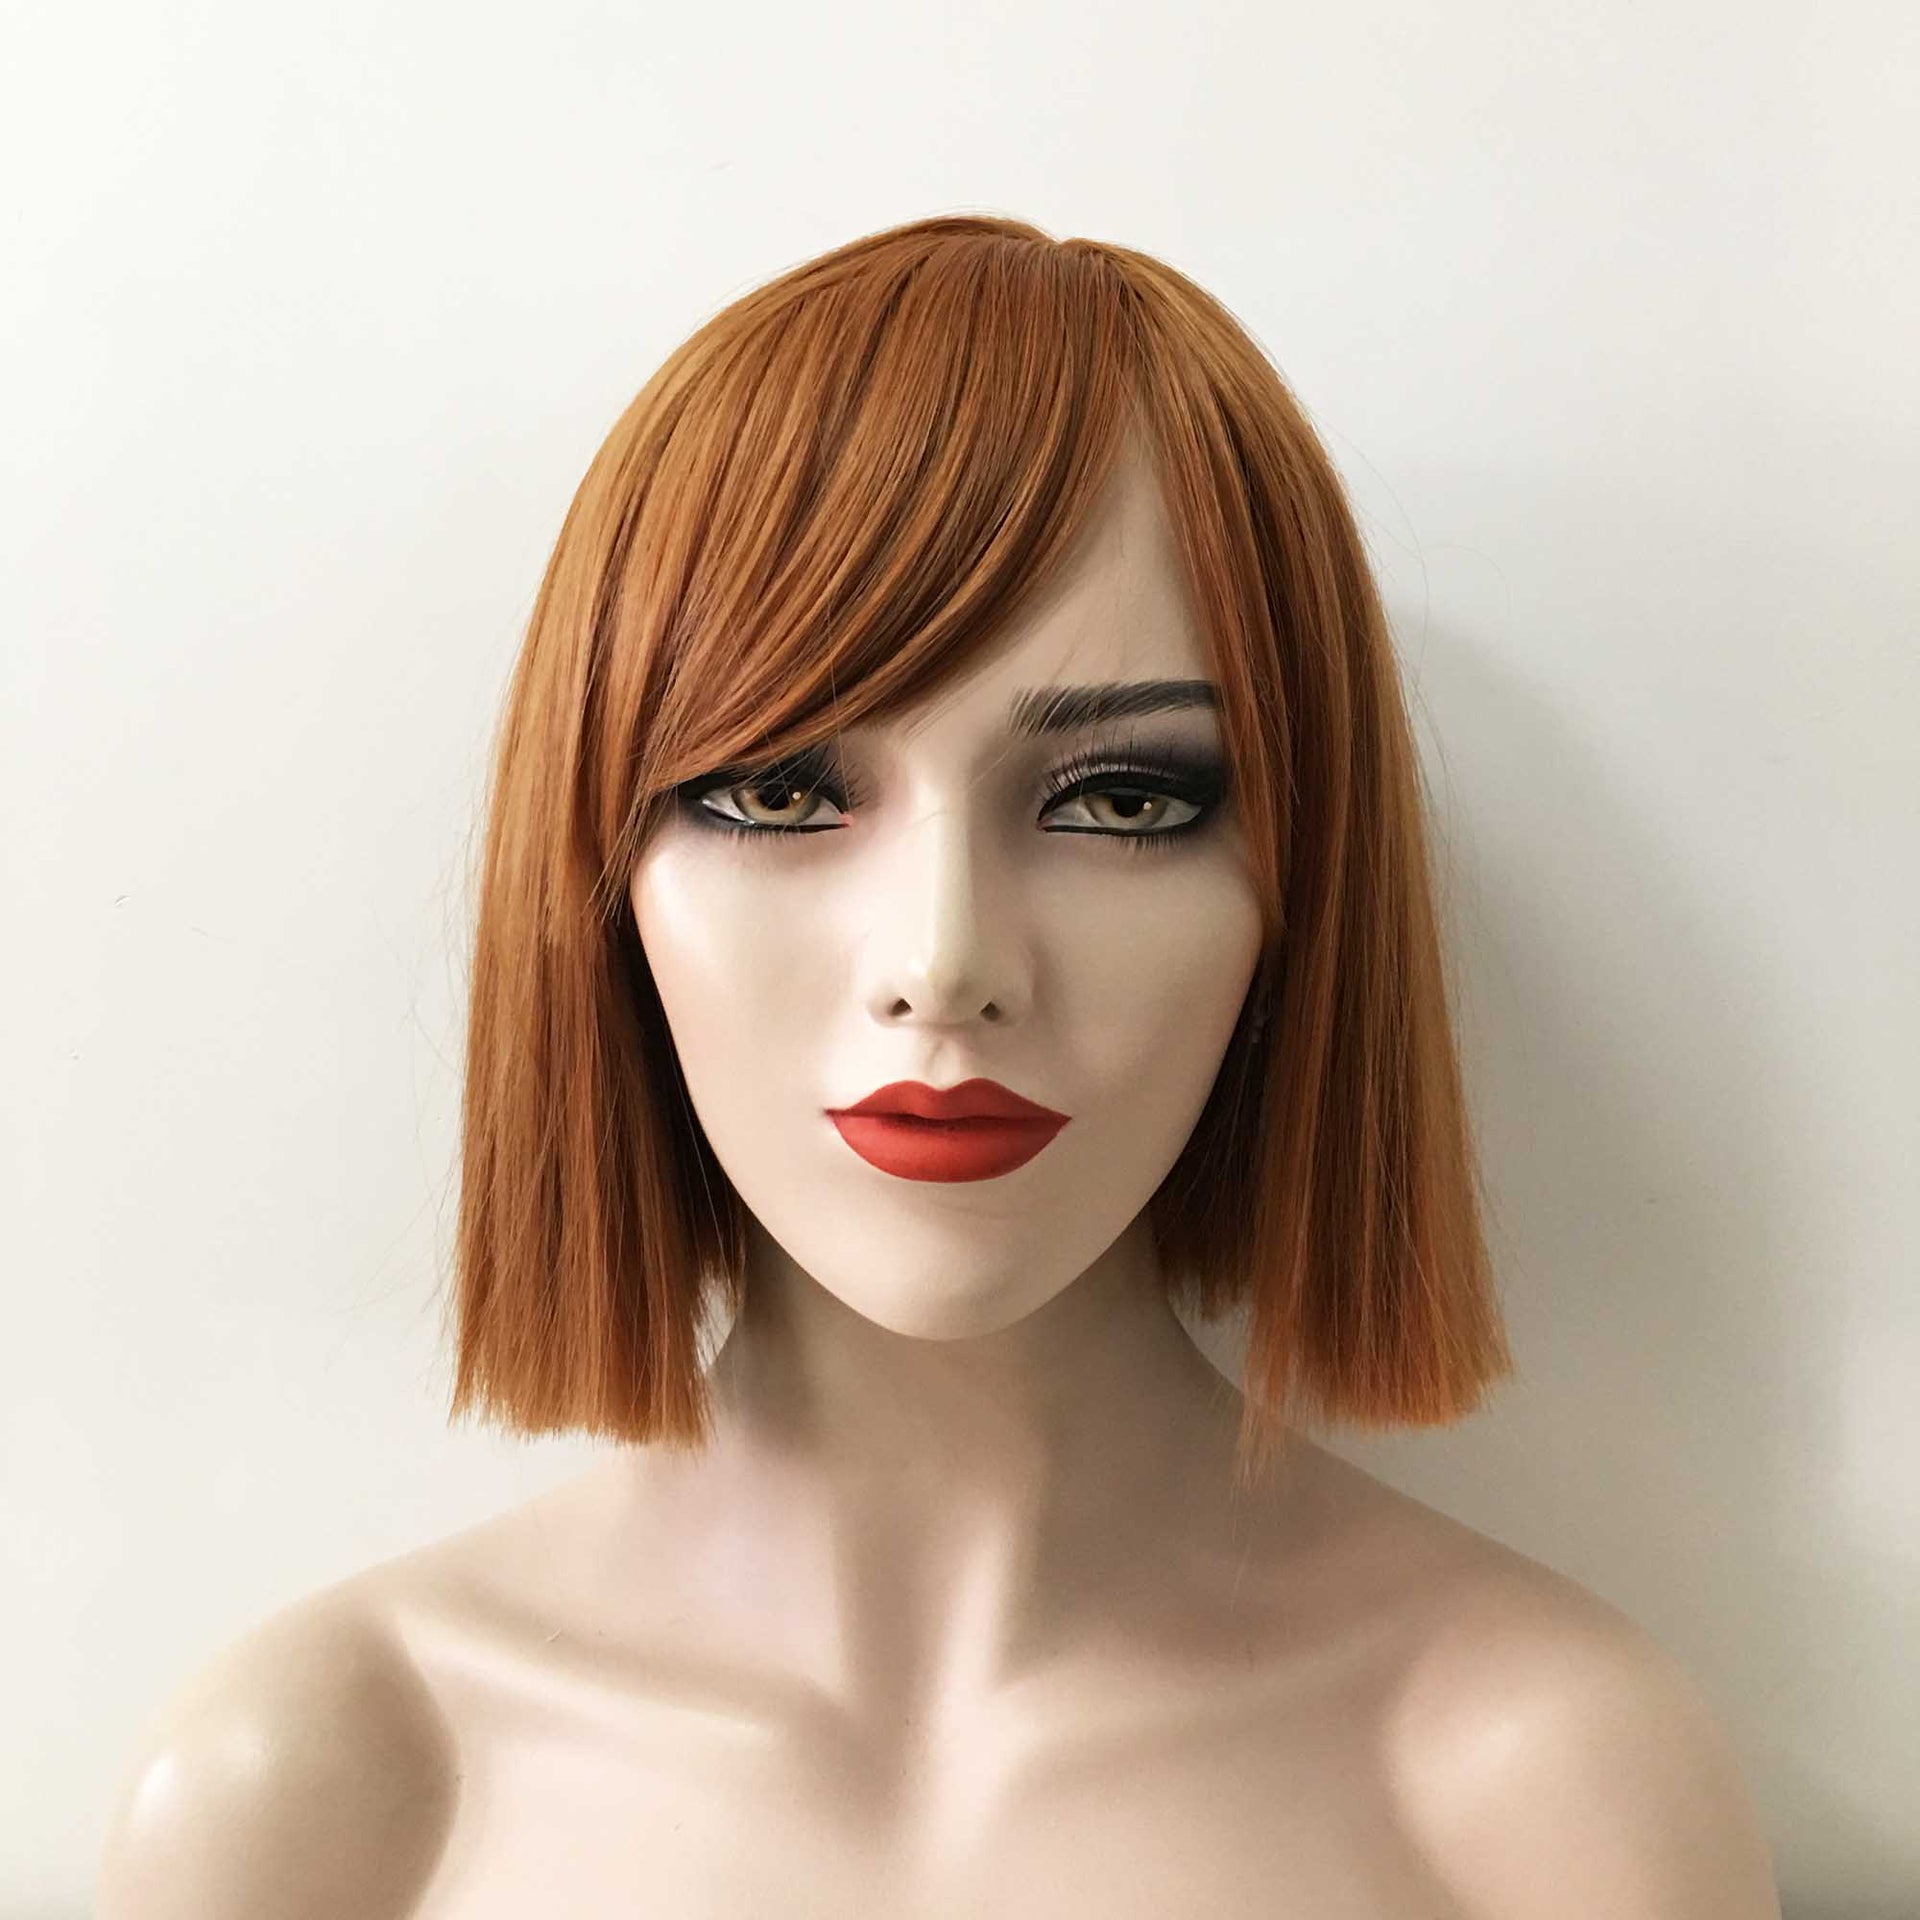 nevermindyrhead Women Ginger Brown Short Straight Bob Blunt Cut Wig